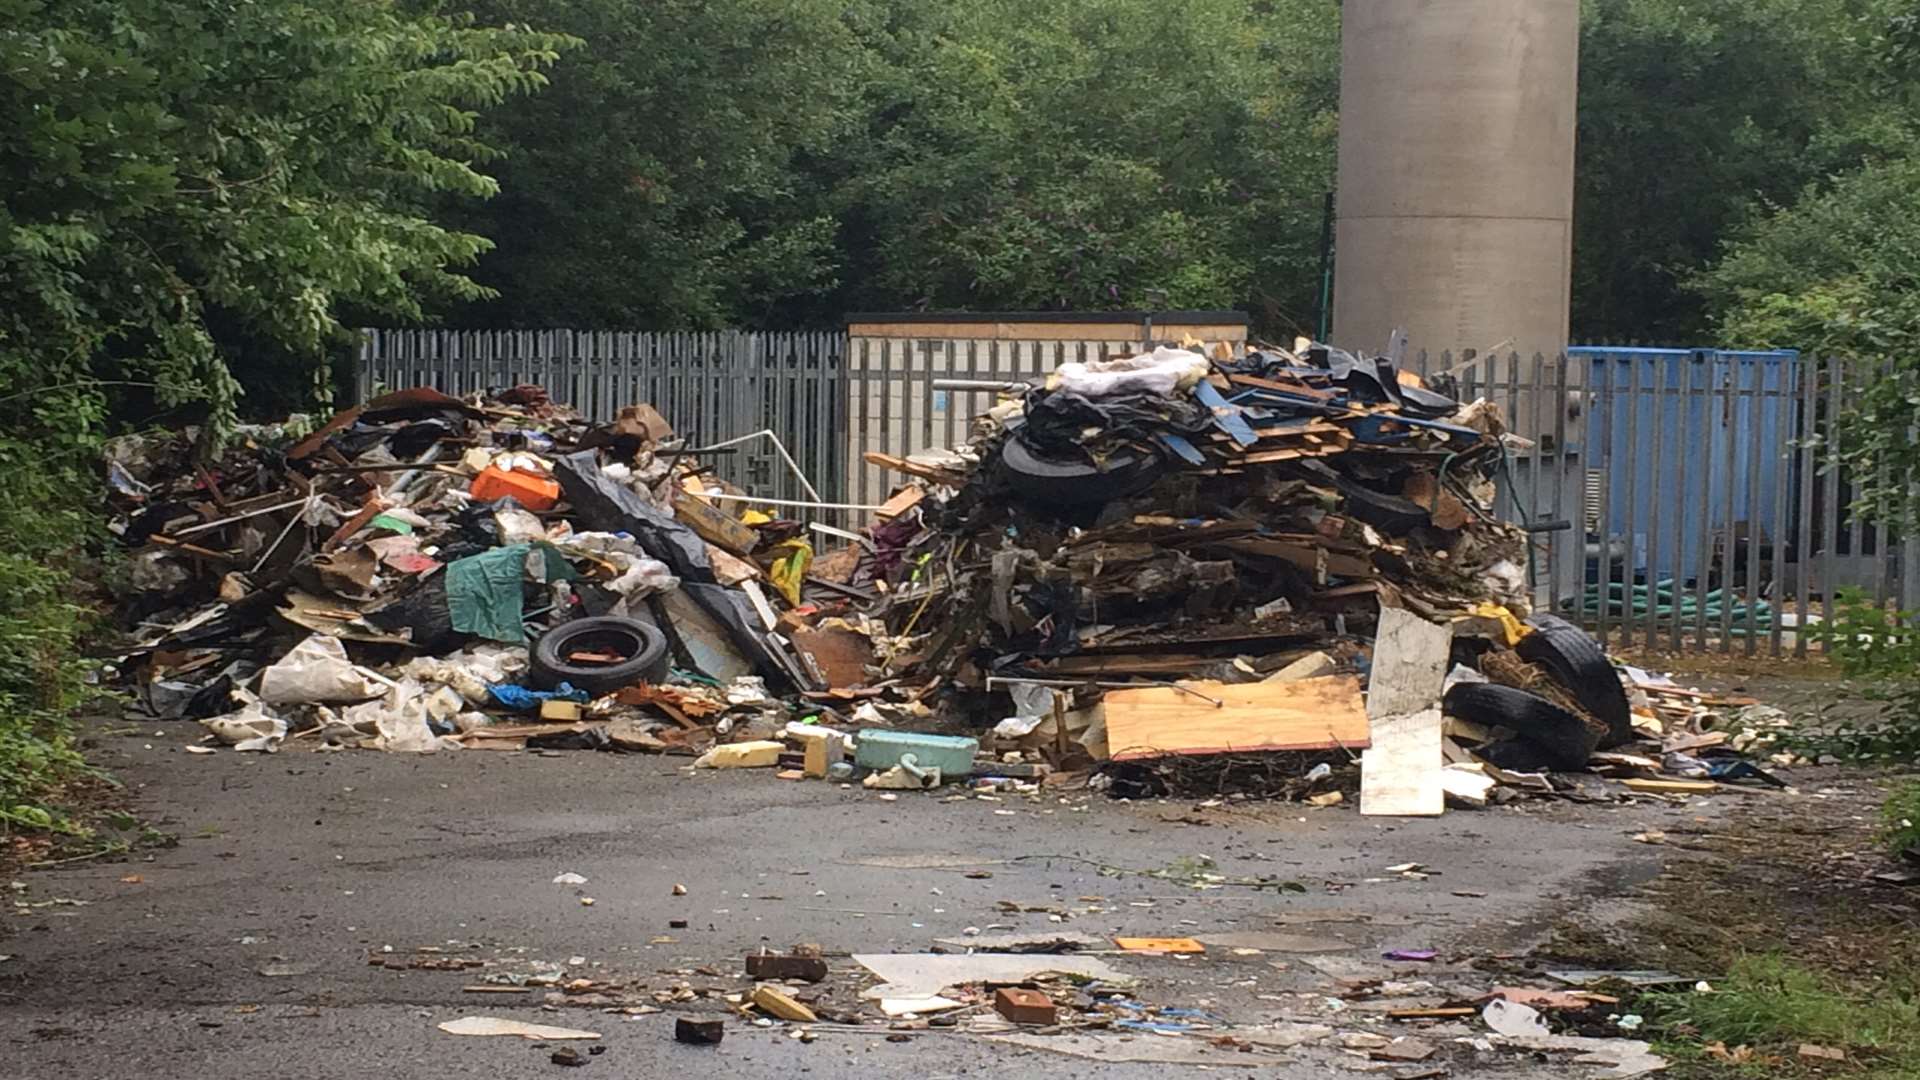 The mountains of rubbish dumped off Brishing Lane